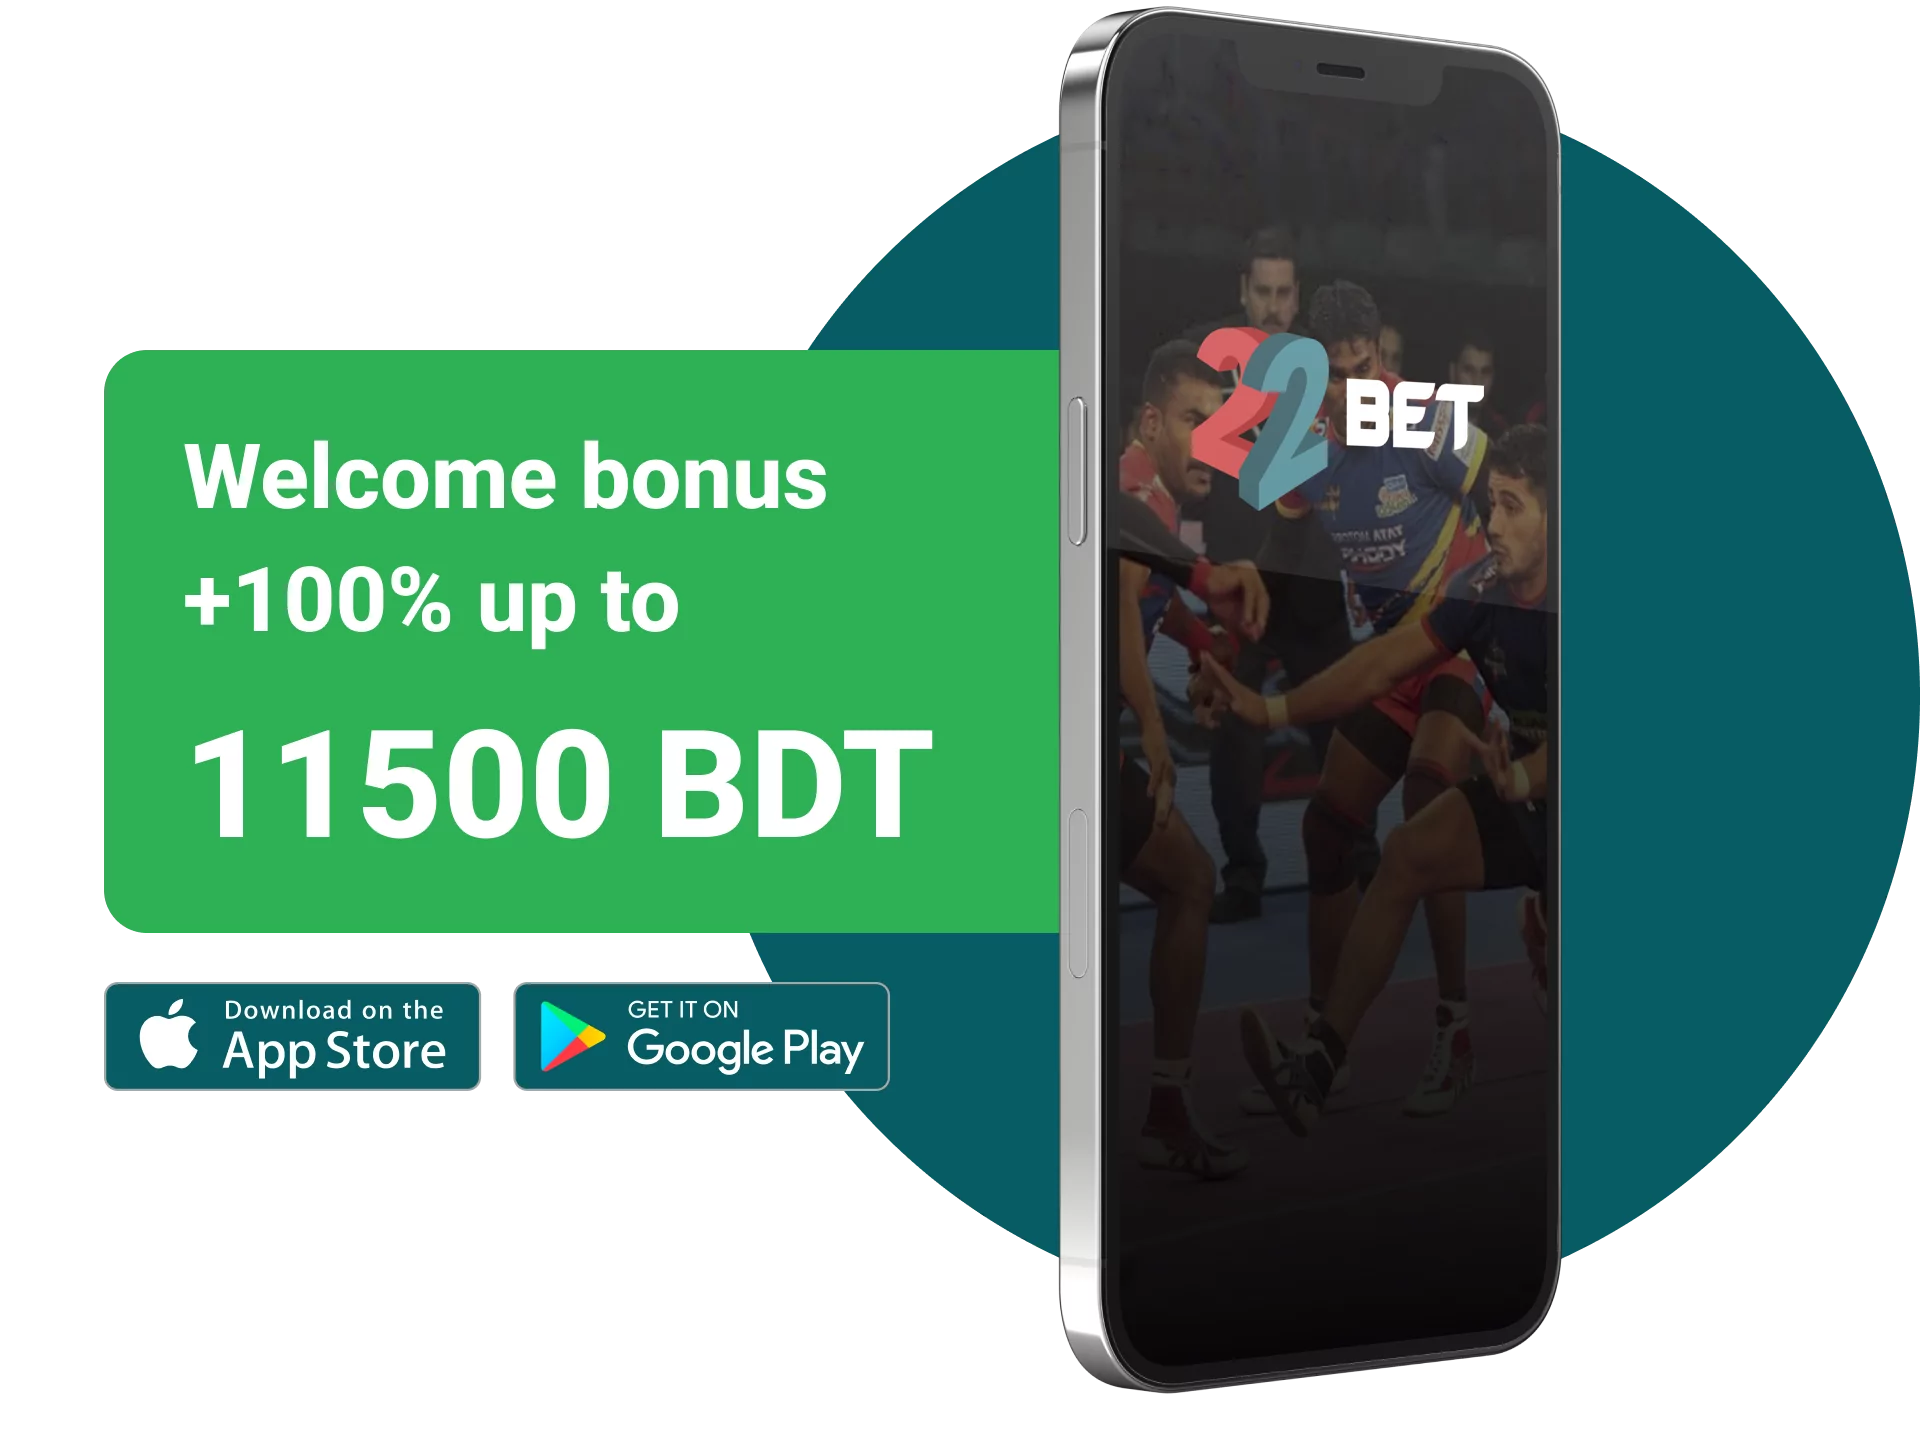 22bet kabaddi betting website gives 100% welcome bonus up to 11,500 BDT.